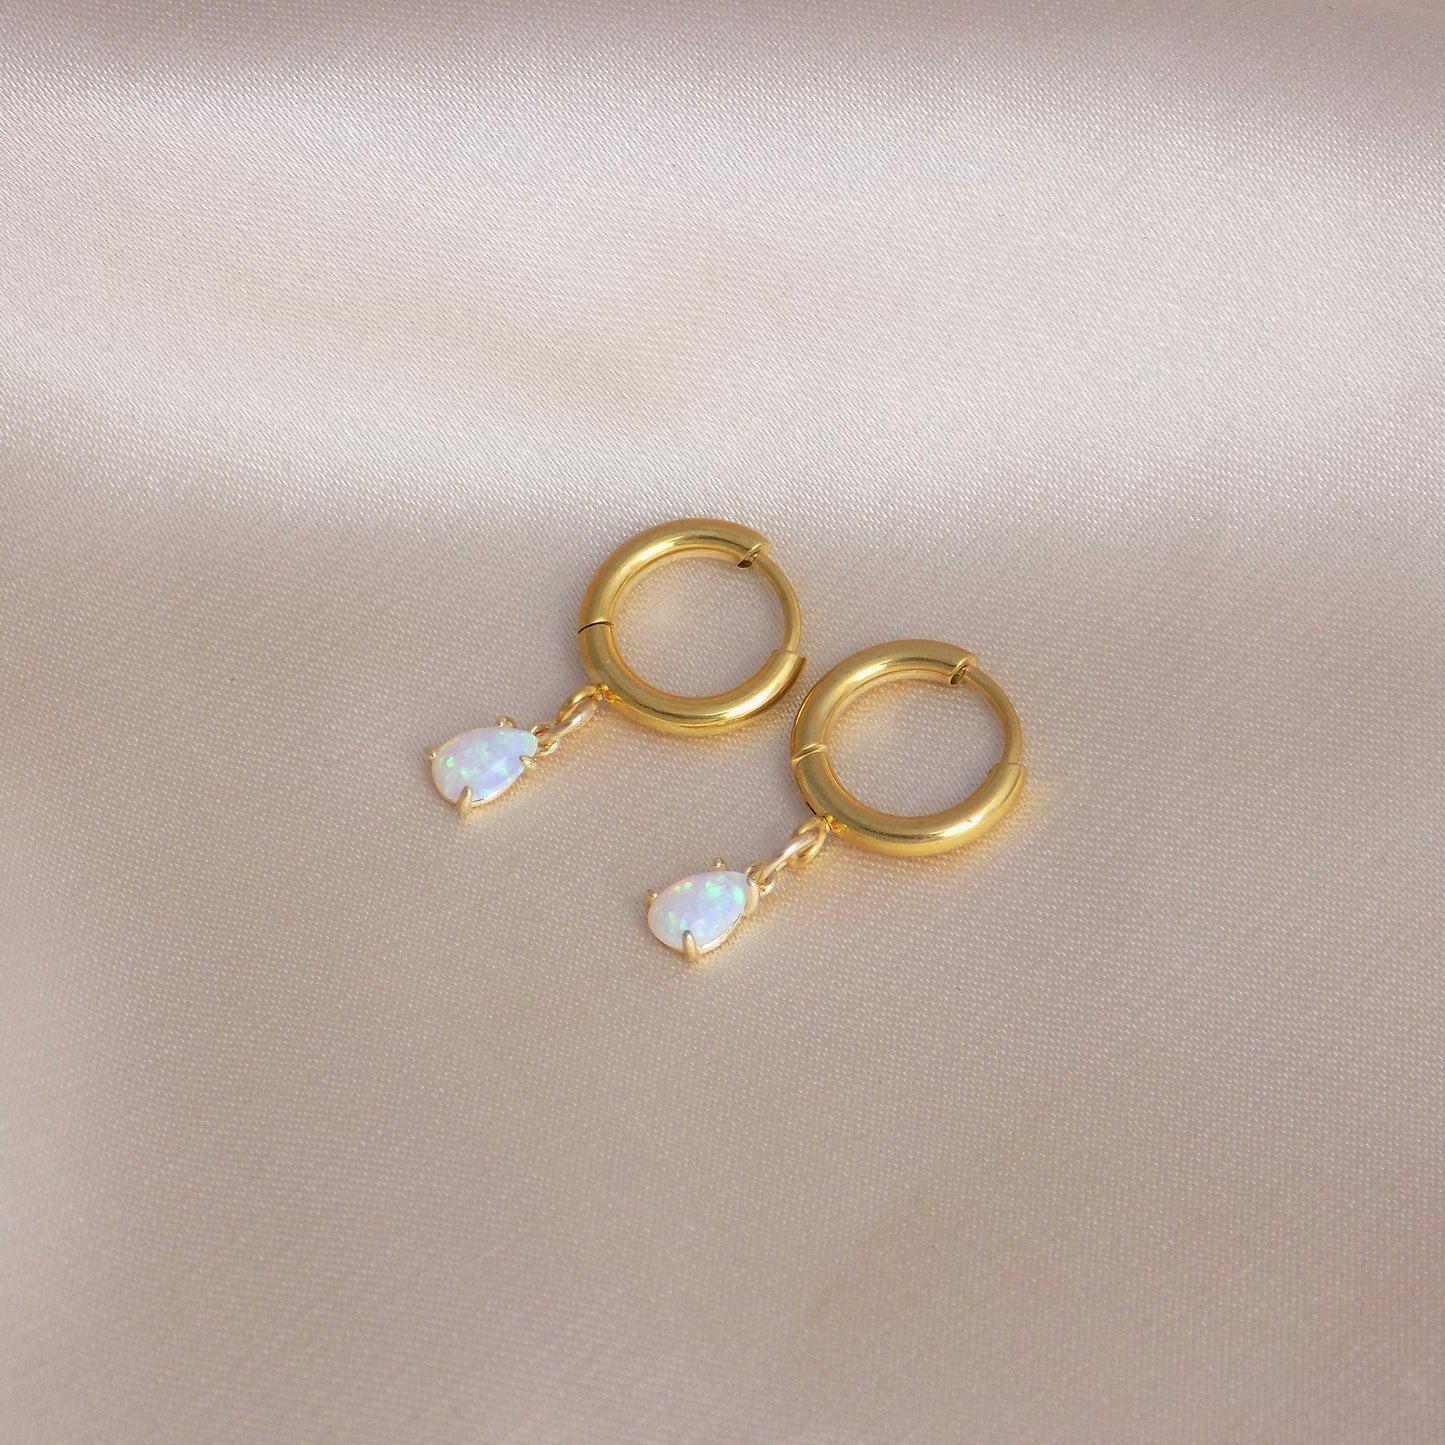 Gold Hoop Earrings With Tiny Teardrop Opal Gemstones, Christmas Gift Women, M6-713